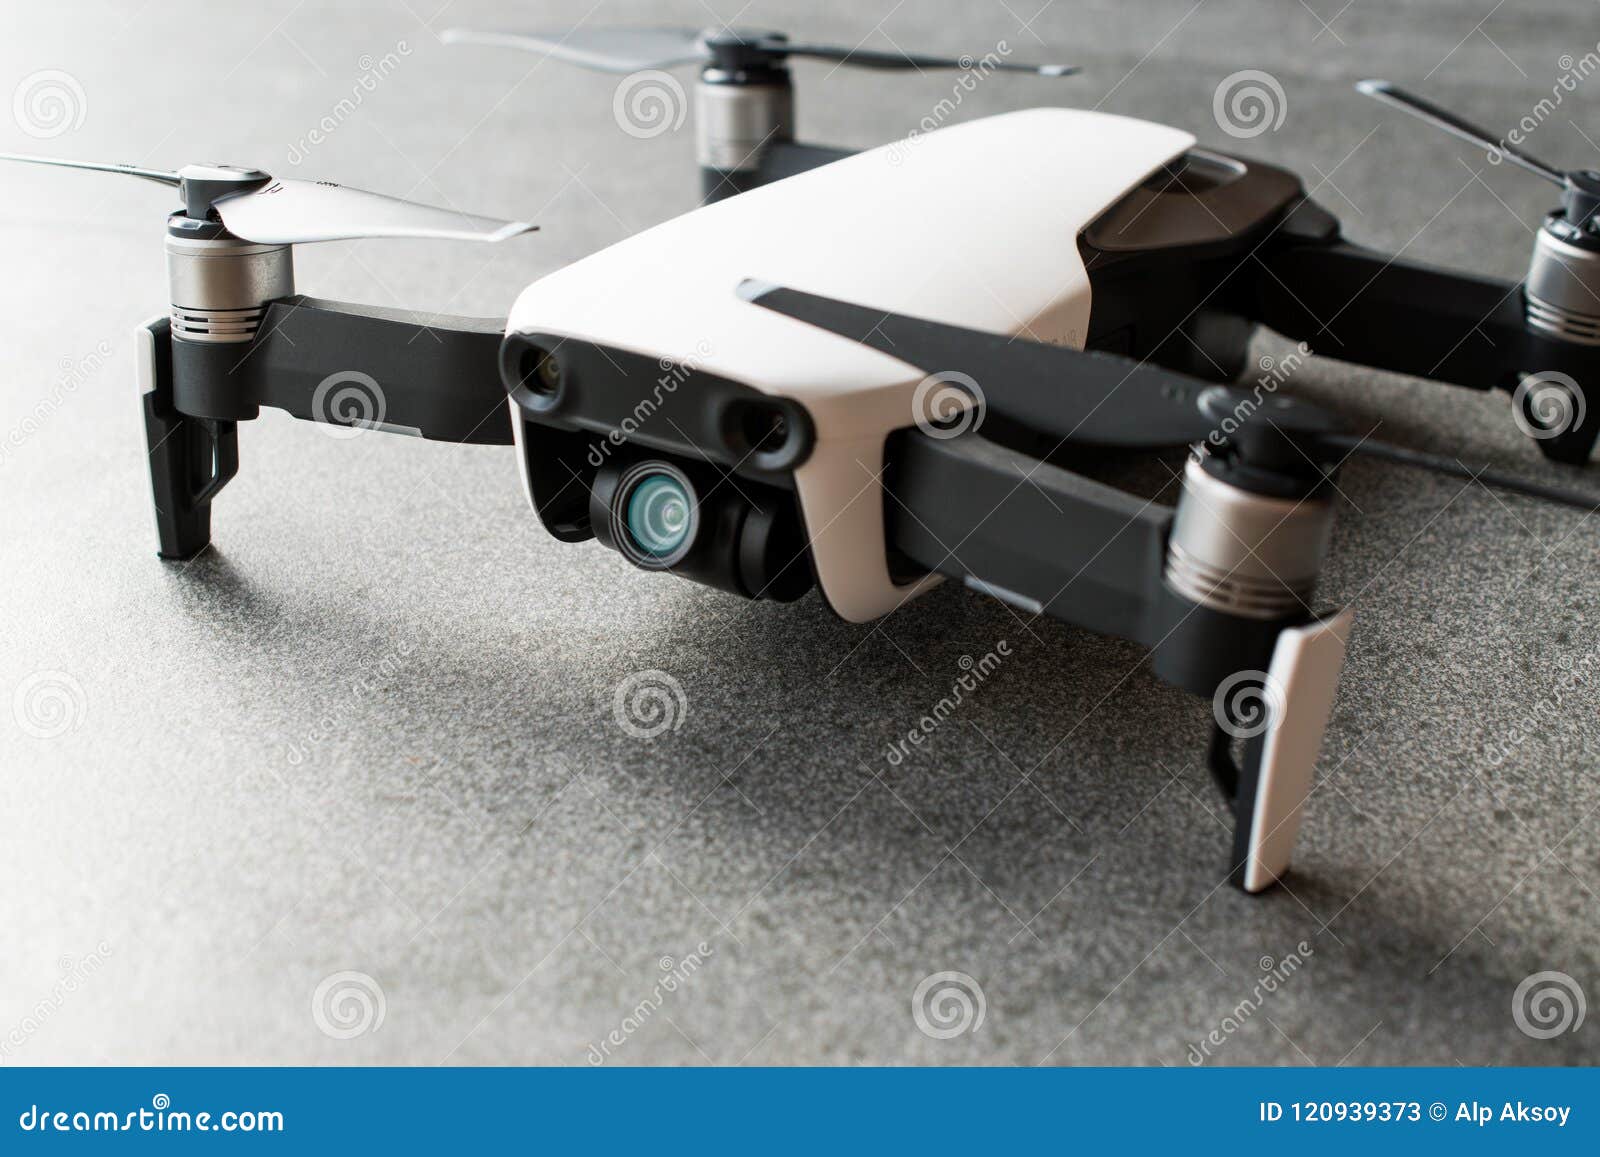 raskorak trgovina peceni dron dji tuzla thebridgesproject org